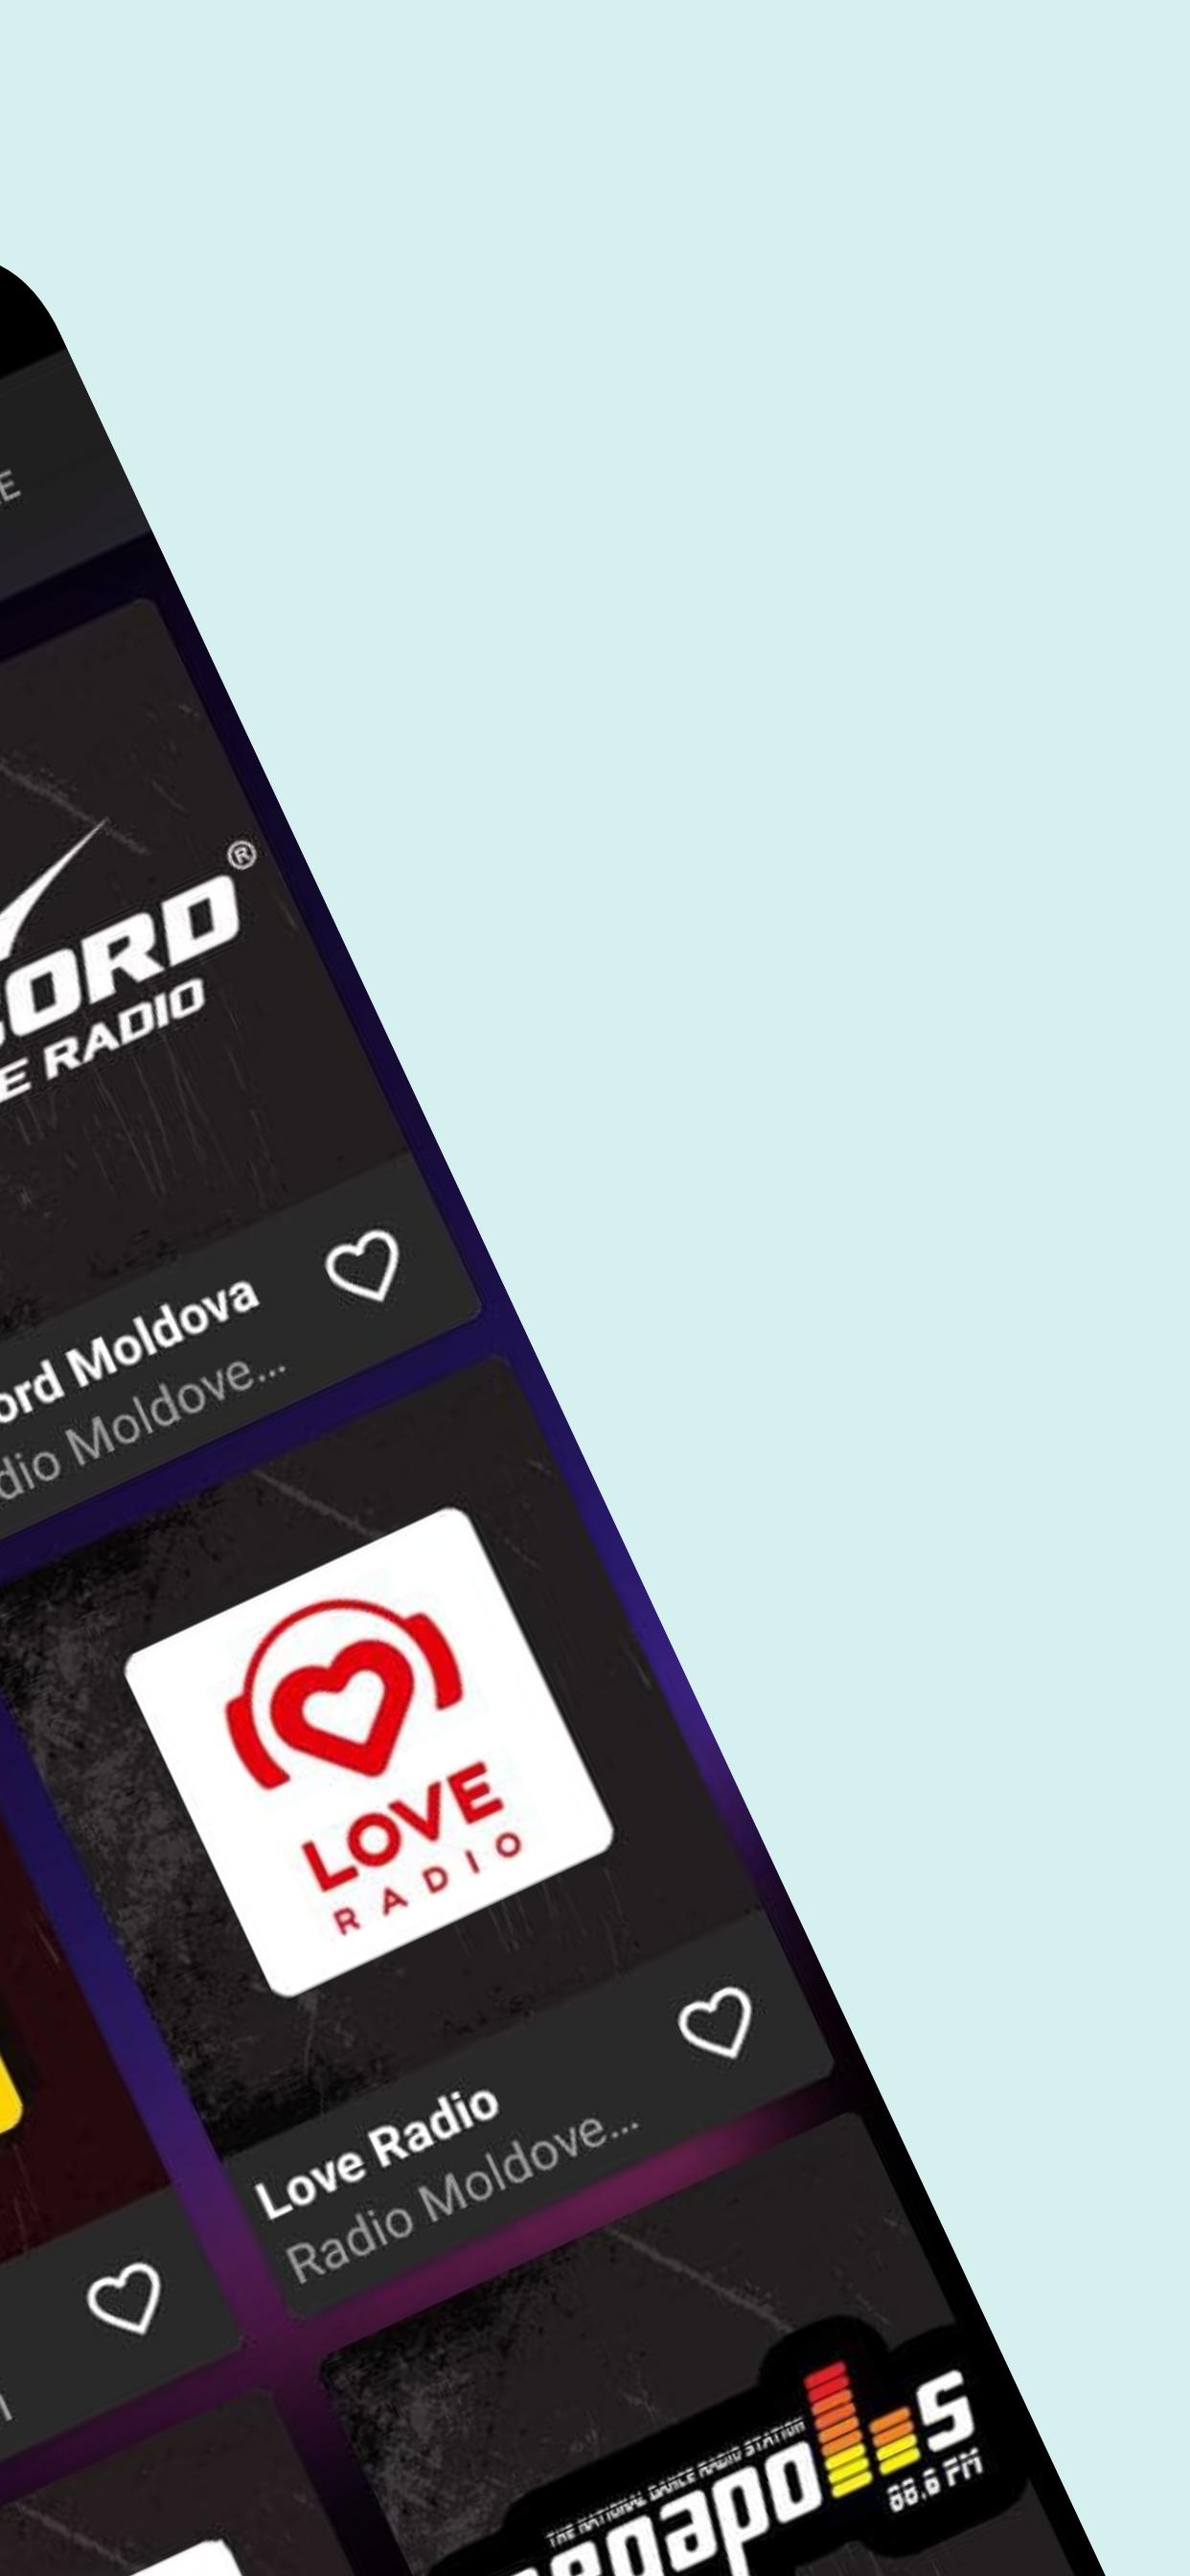 Radio Moldova - FM Online APK for Android Download